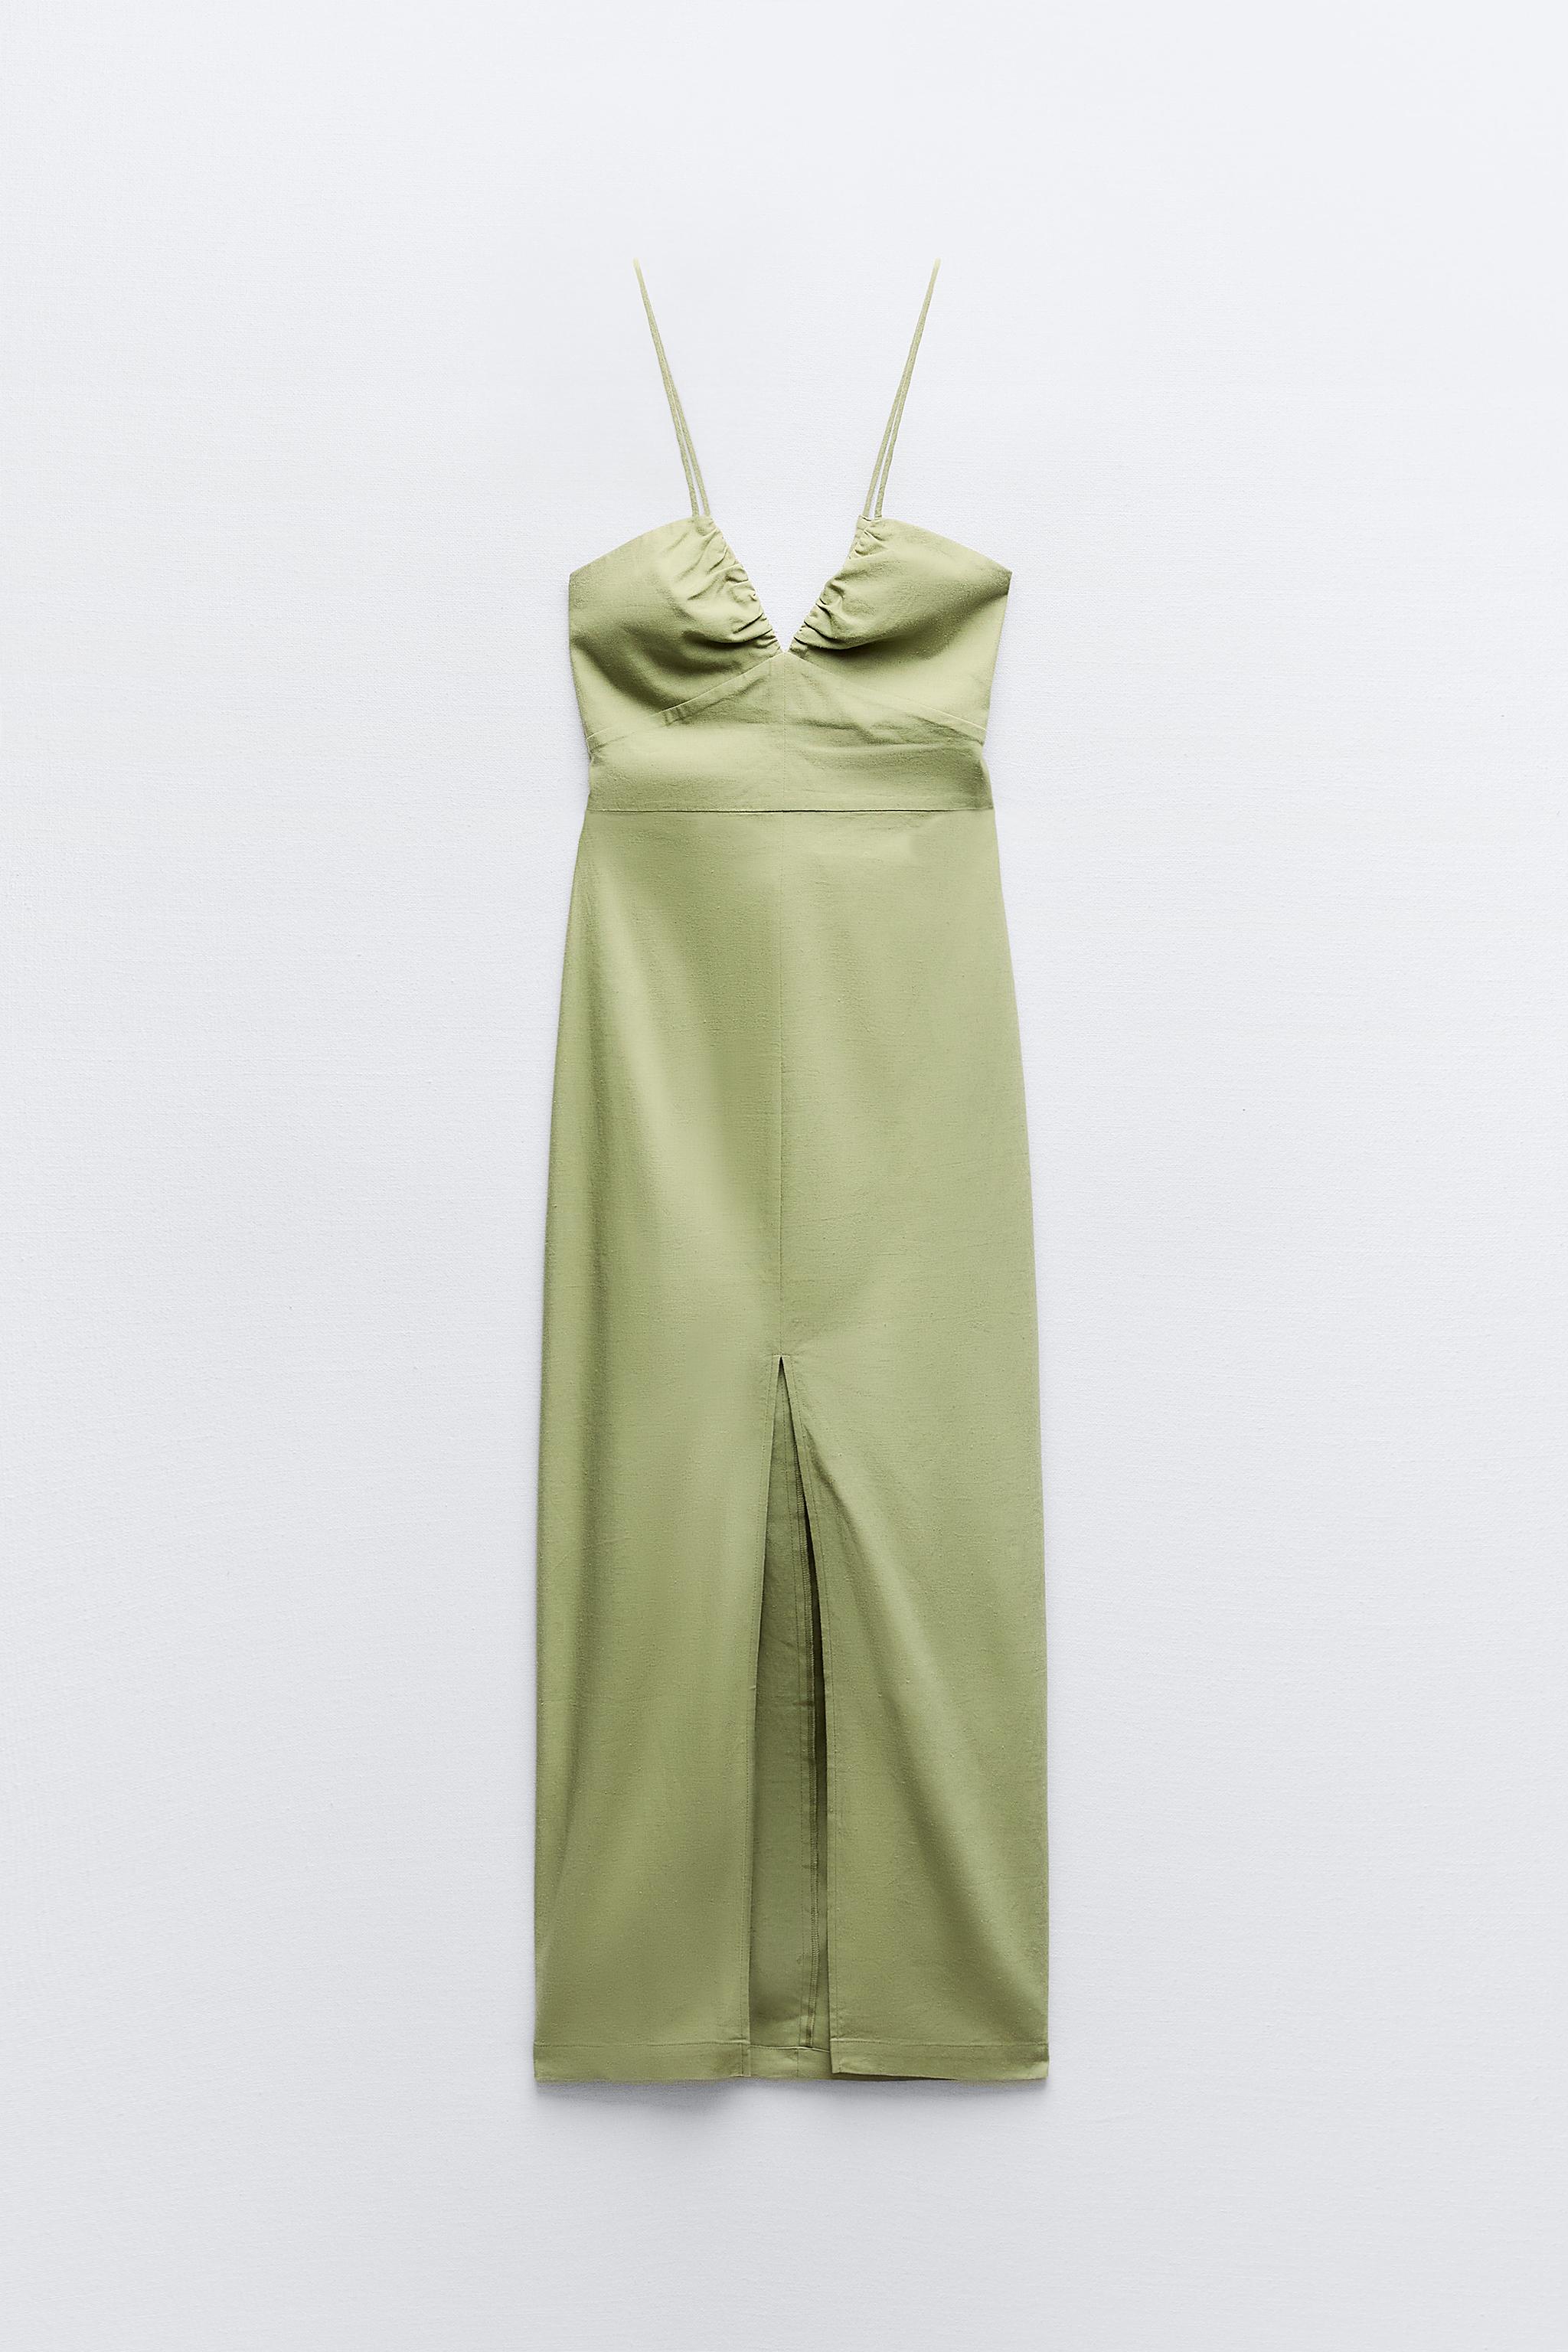 GEOMETRIC PRINT DRESS ZW COLLECTION - Multicolored